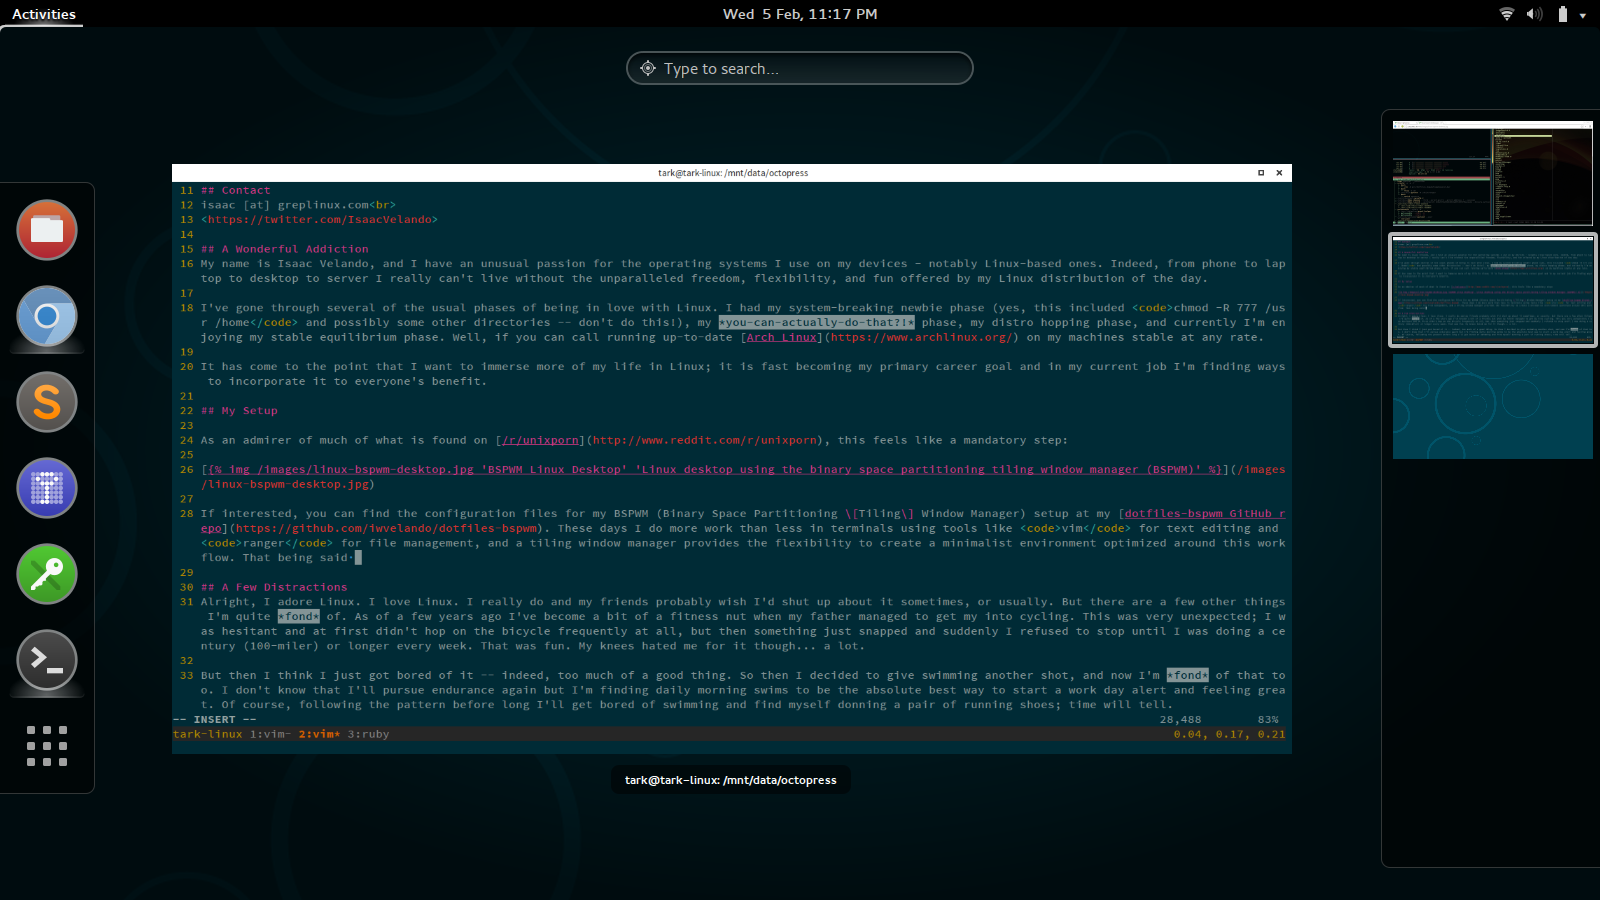 Linux desktop using the GNOME desktop environment